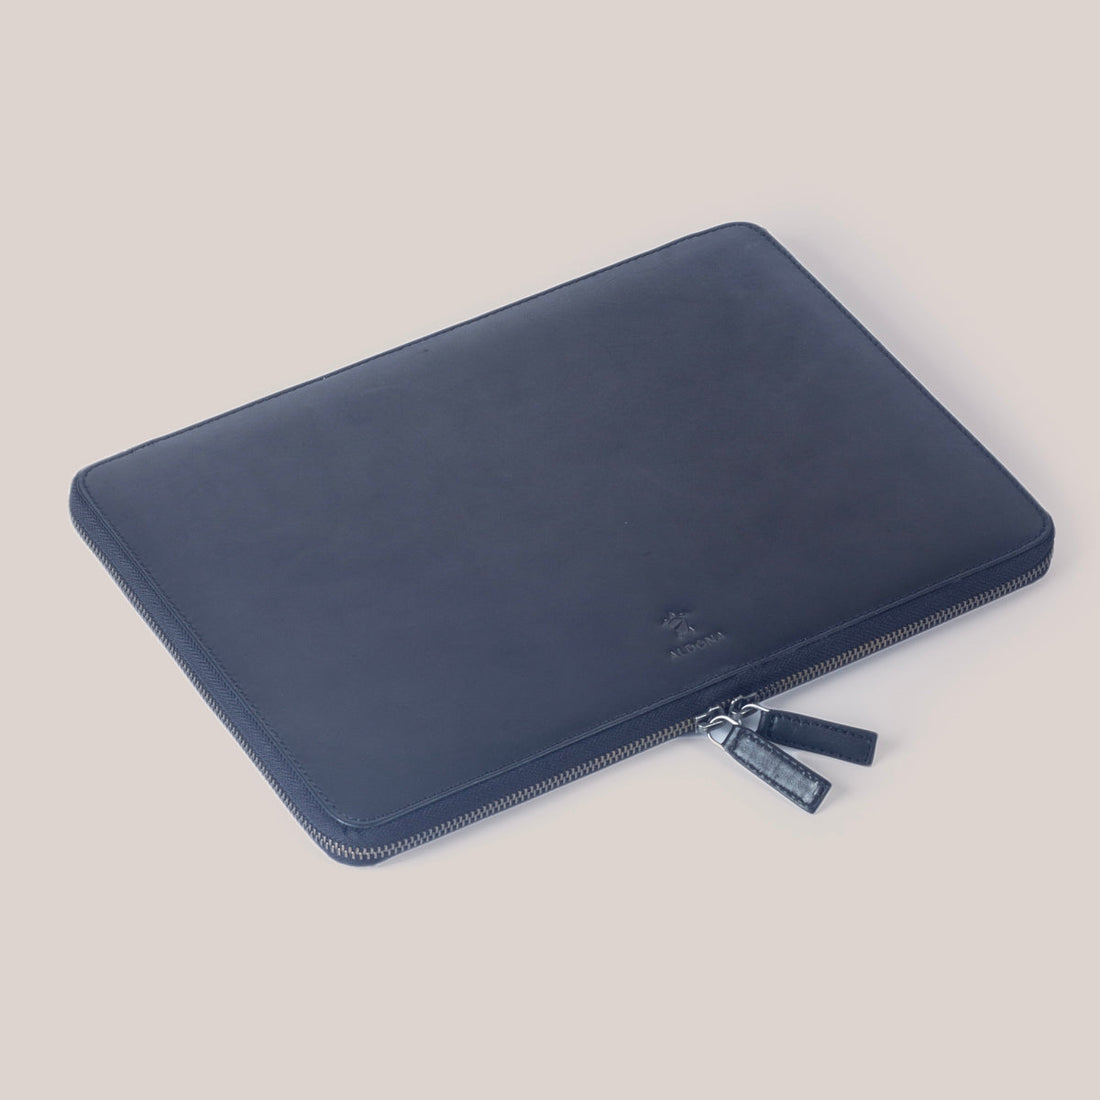 Microsoft Surface Book 15 Zippered Laptop Case - Cognac